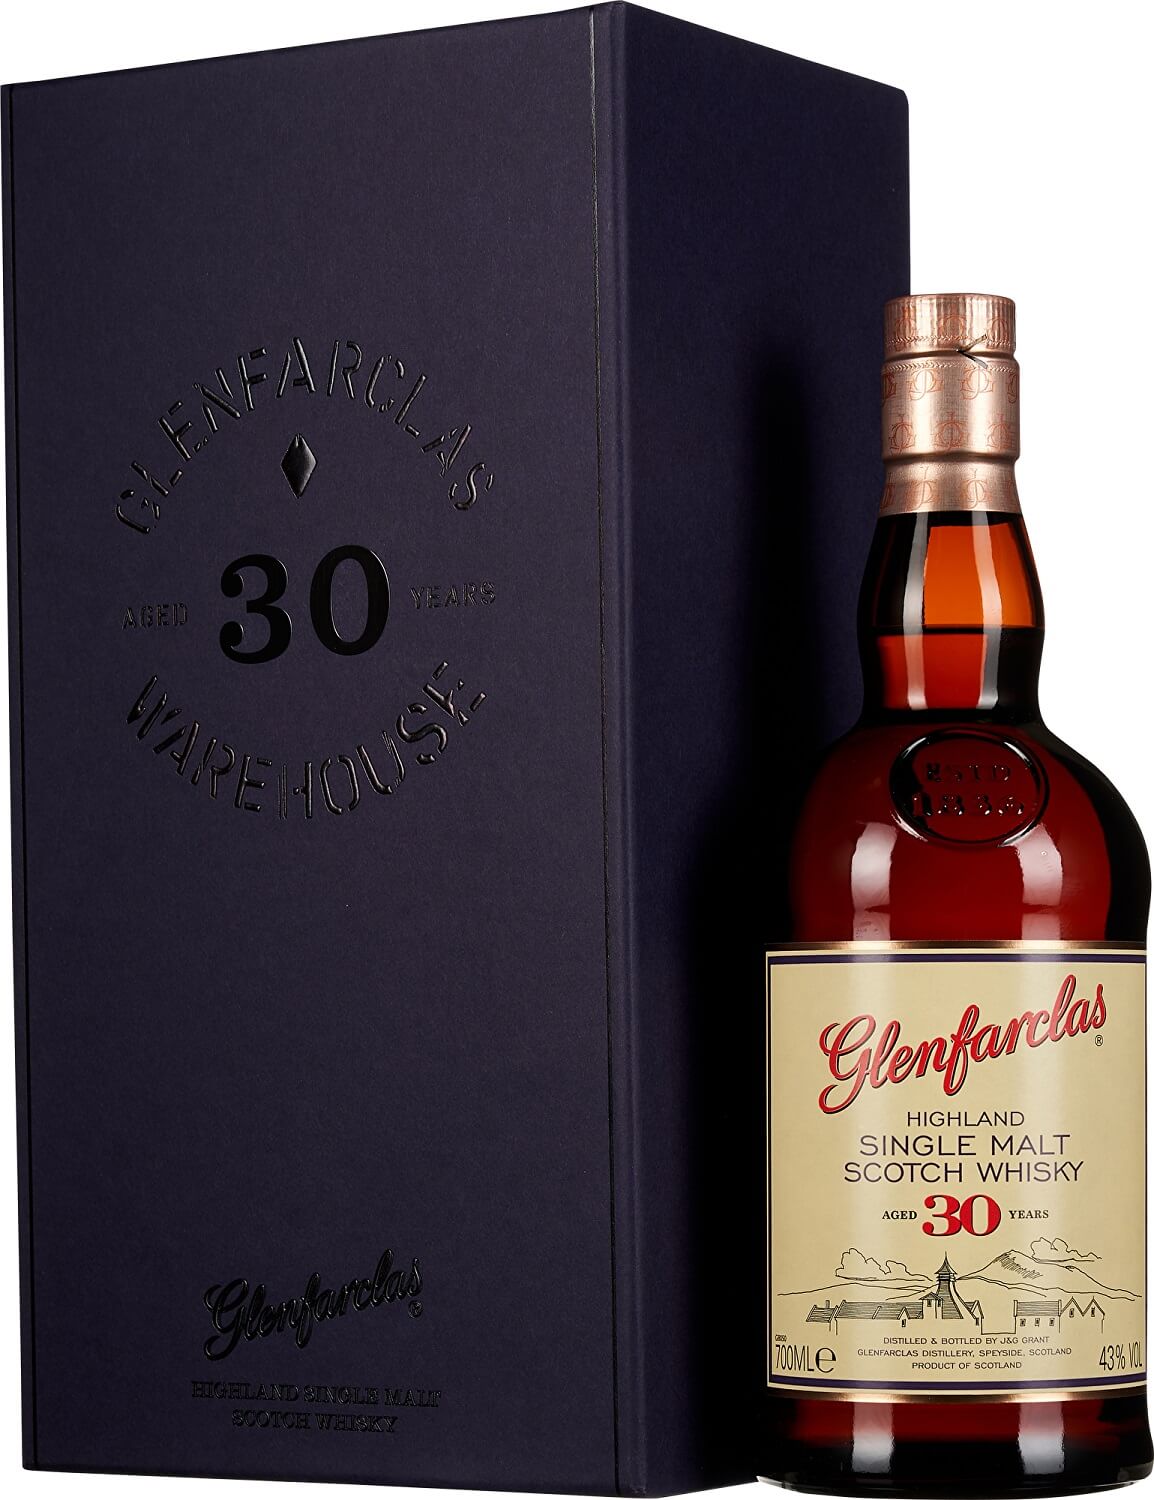 Glenfarclas Highland Single Malt Scotch Whisky 30 Jahre Warehouse Edition  43% Vol.